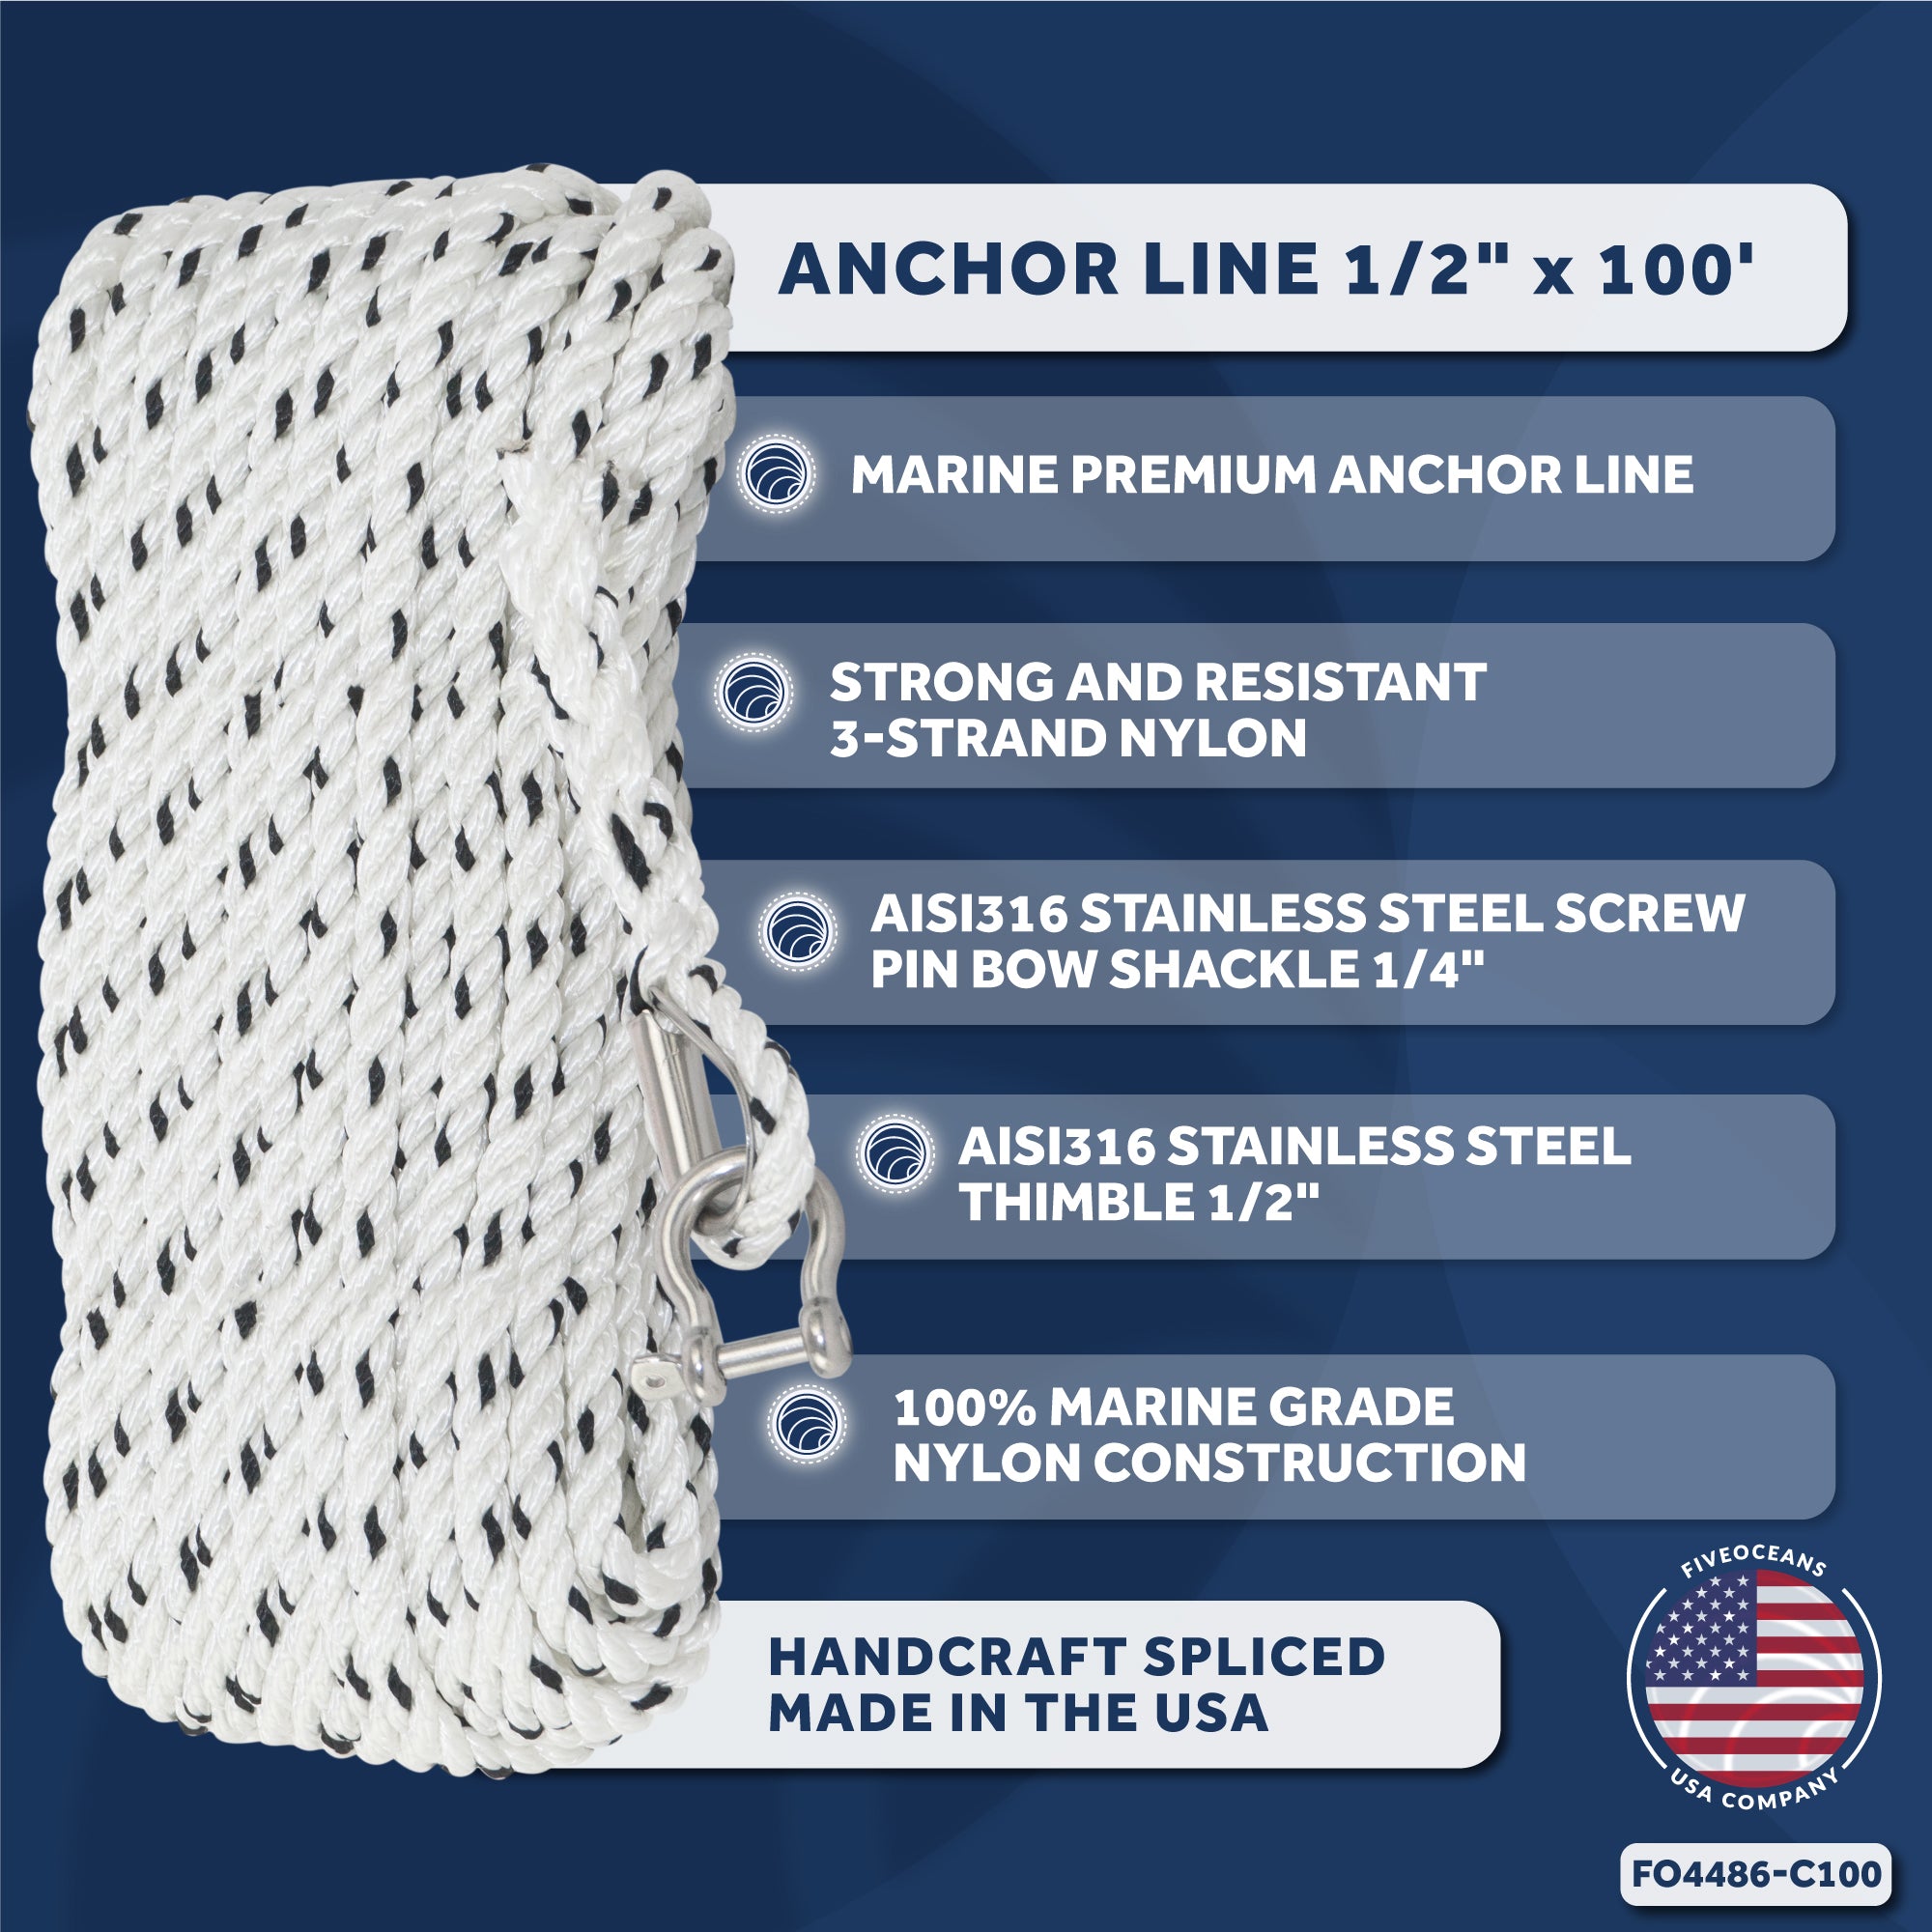 Anchor Line 1/2" x 100', 3-Strand Nylon, Spliced - FO4486-C100